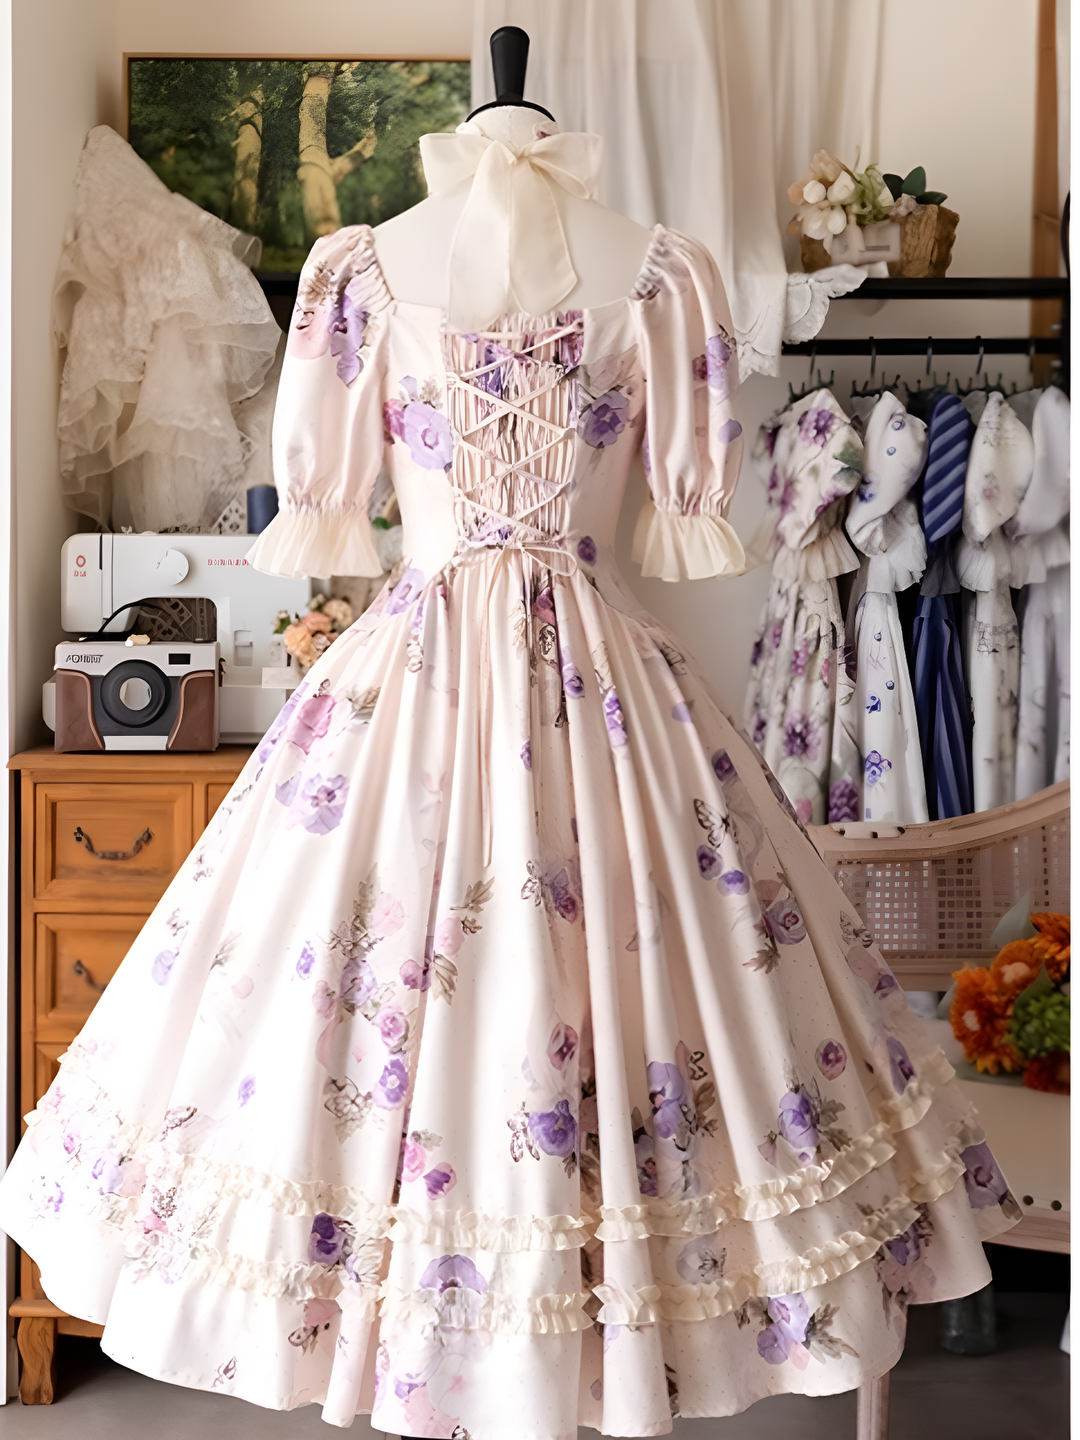 Forest Wardrobe~Forest Basket~Classic Lolita OP Dress Floral Print   